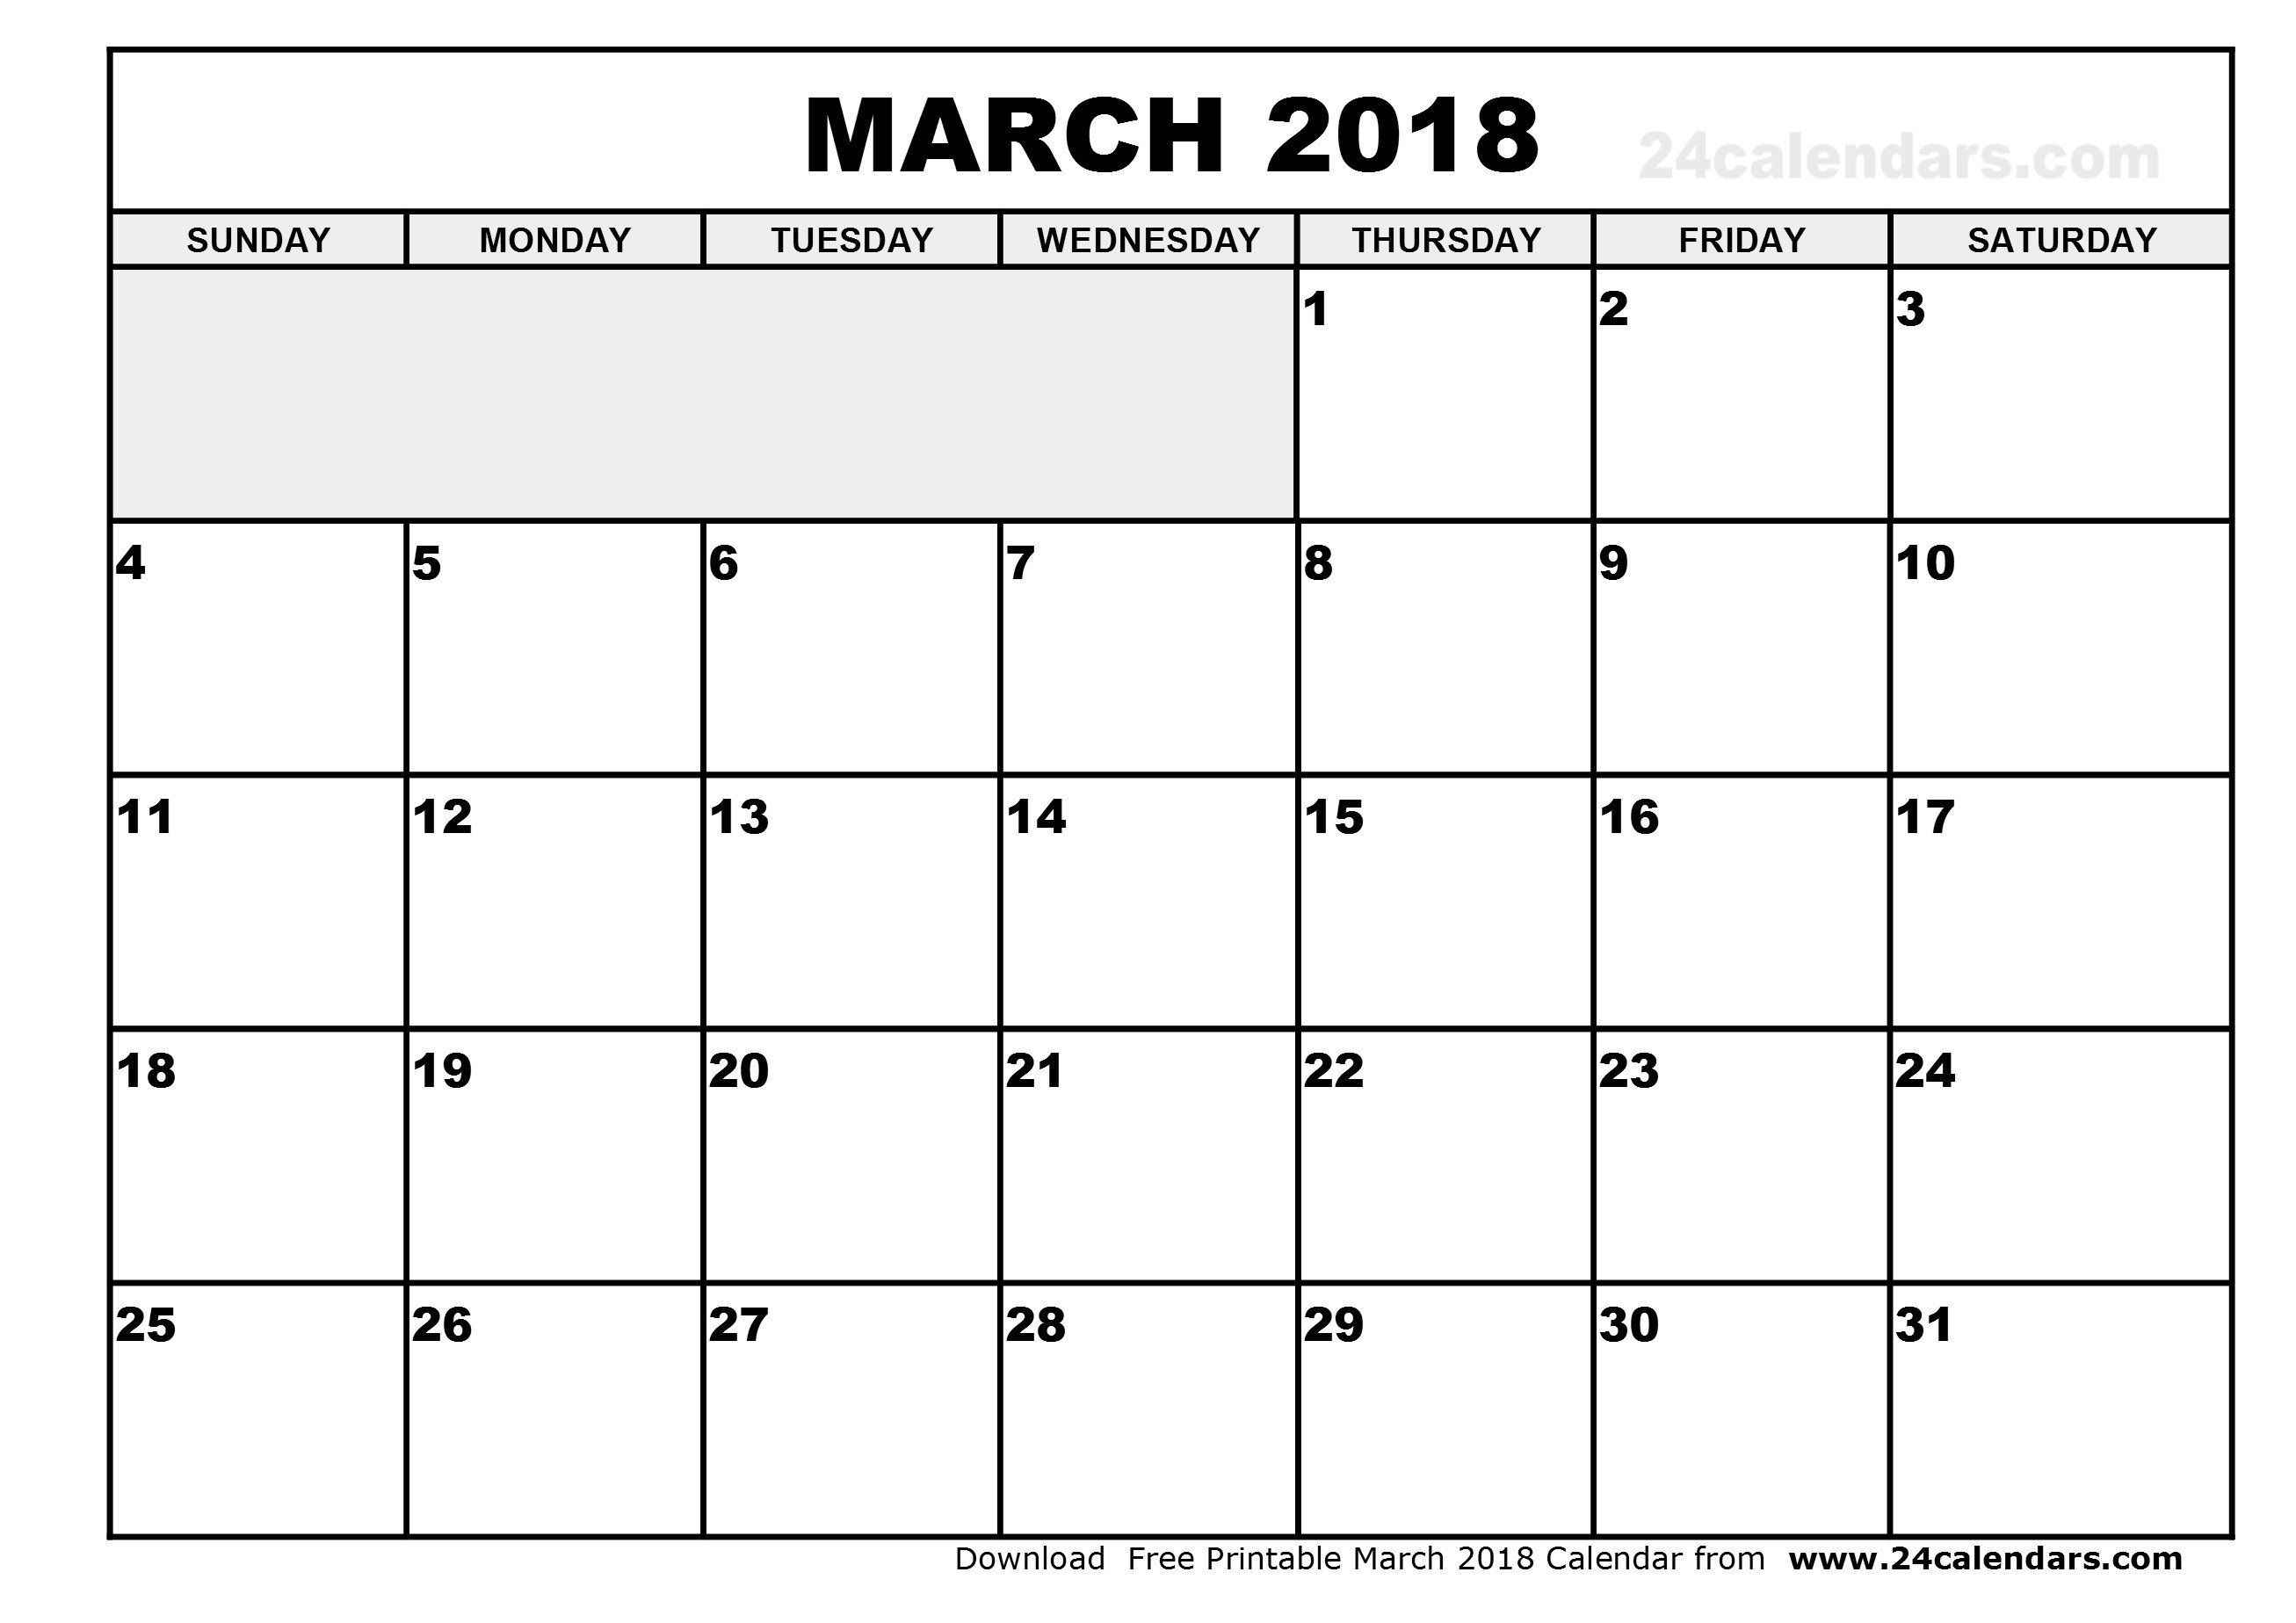 Wallpaper Calendar March 2018 73 images